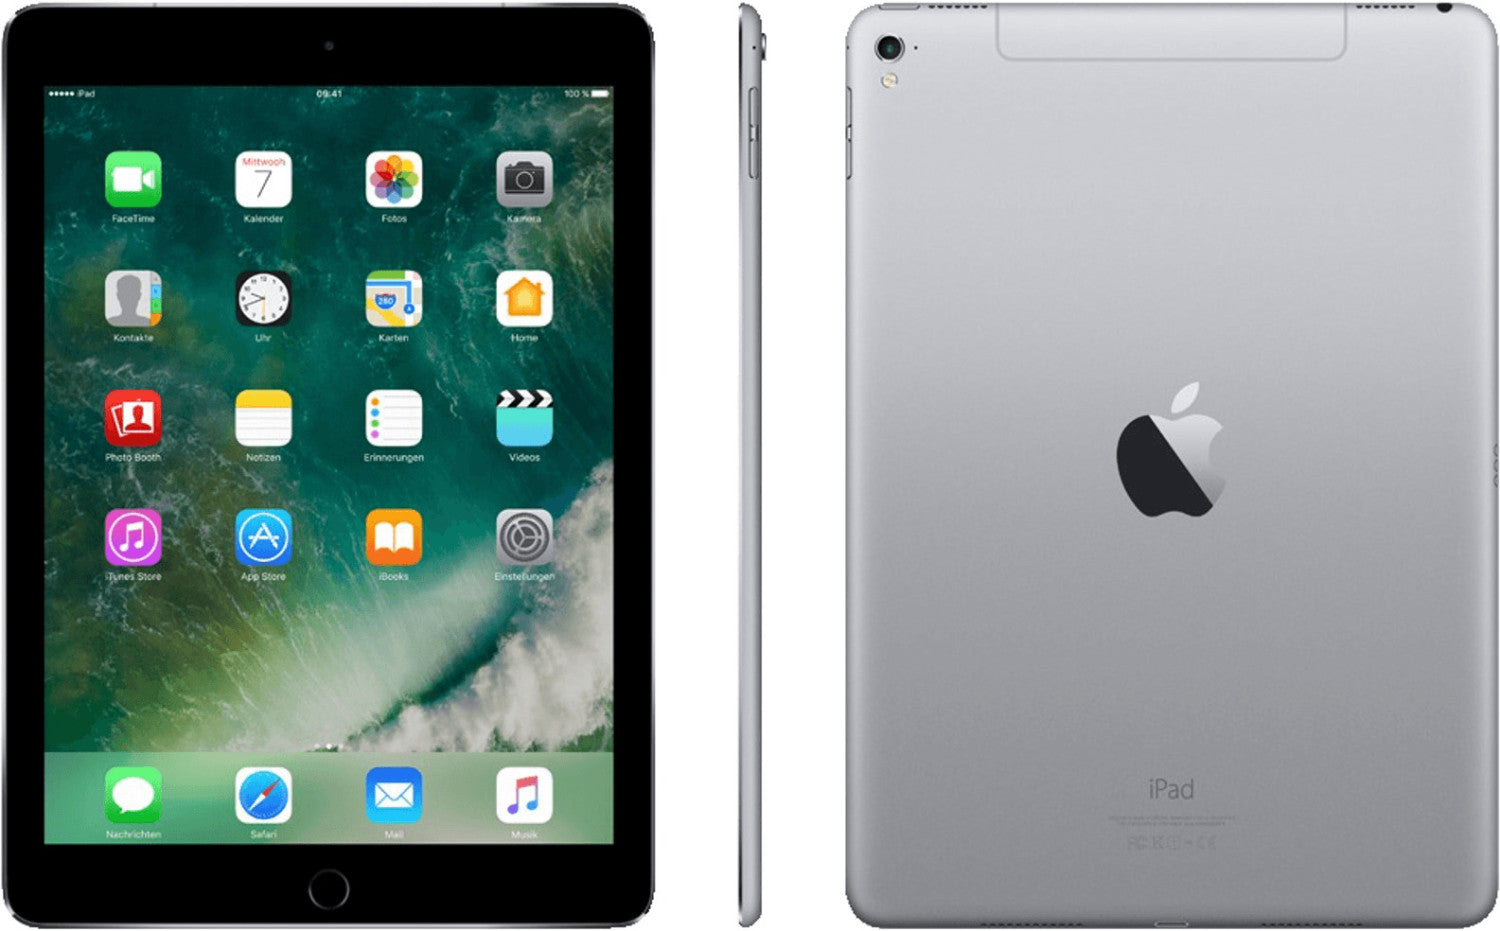 Apple iPad Pro 9.7-inch | Wi-Fi+Cellular | 128GB | Space Gray | GUT.